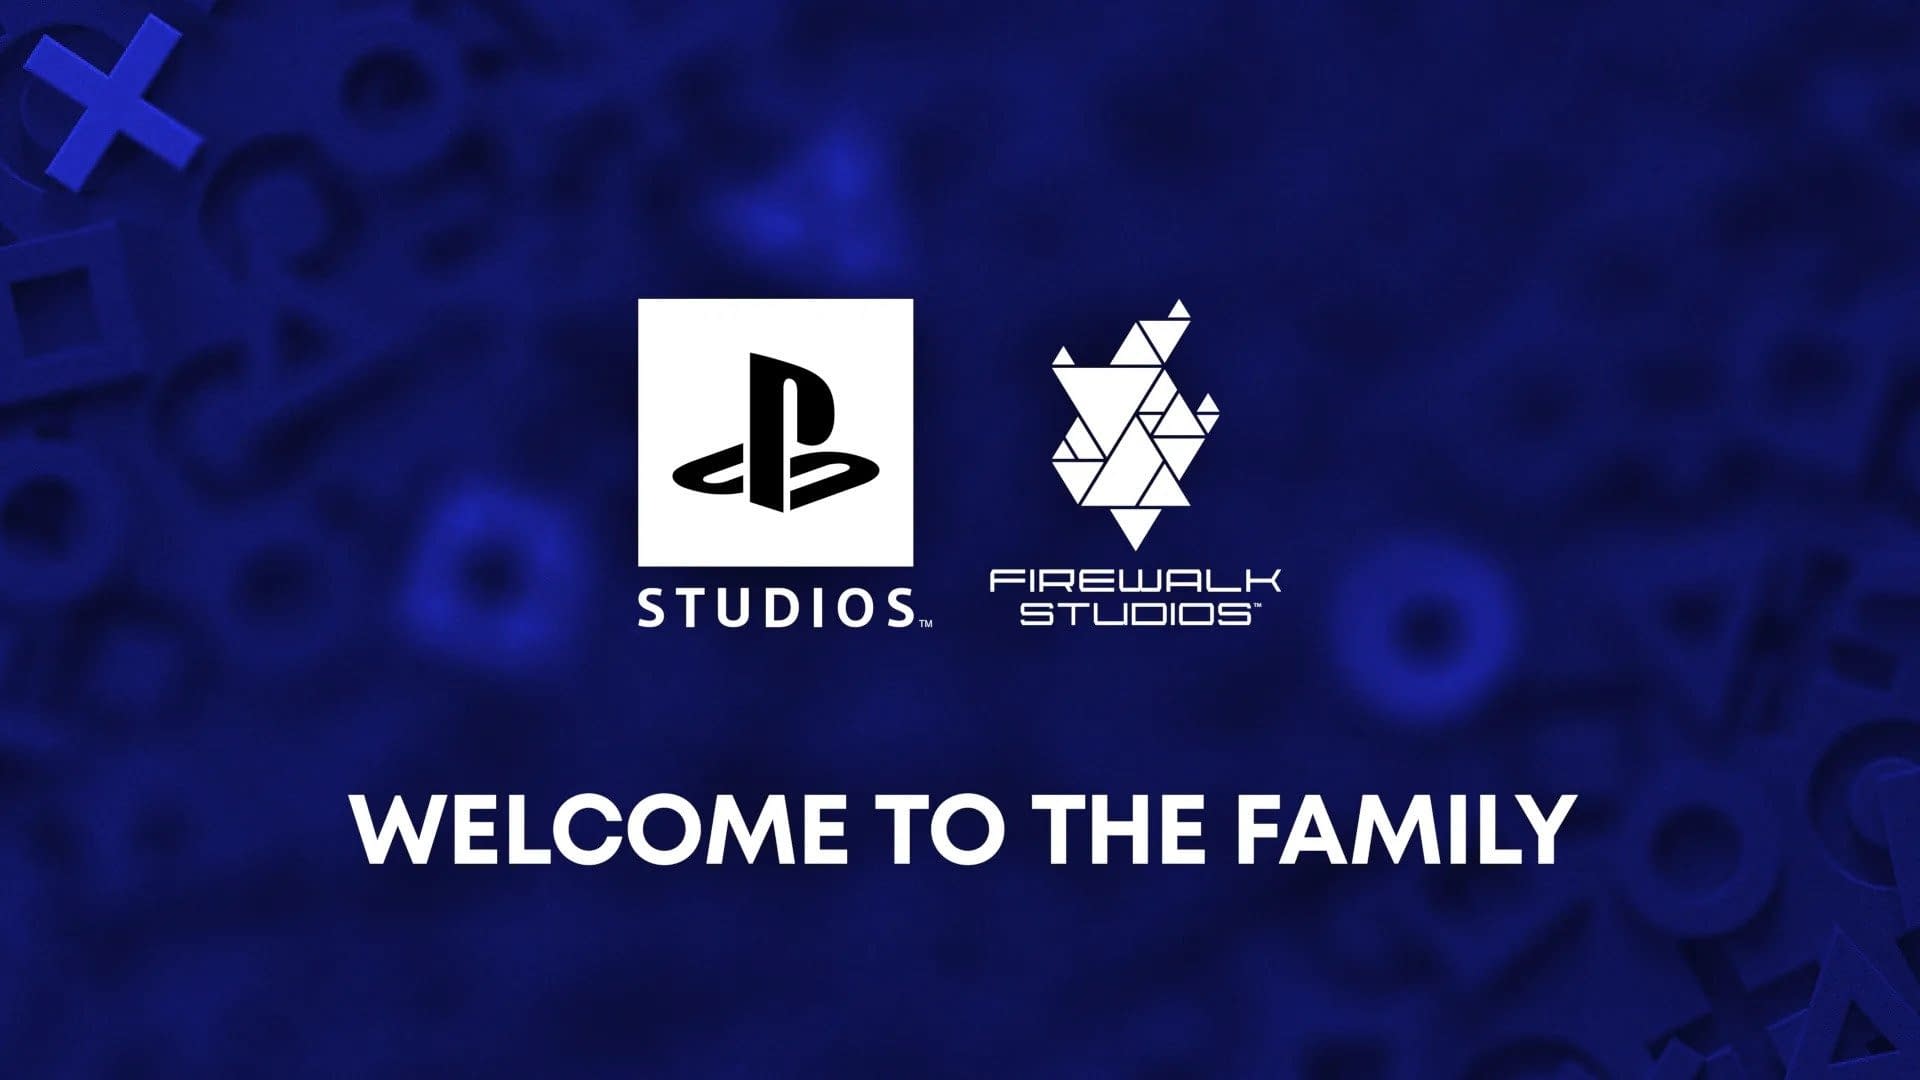 Sony Interactive Entertainment purchased Firewalk Studios